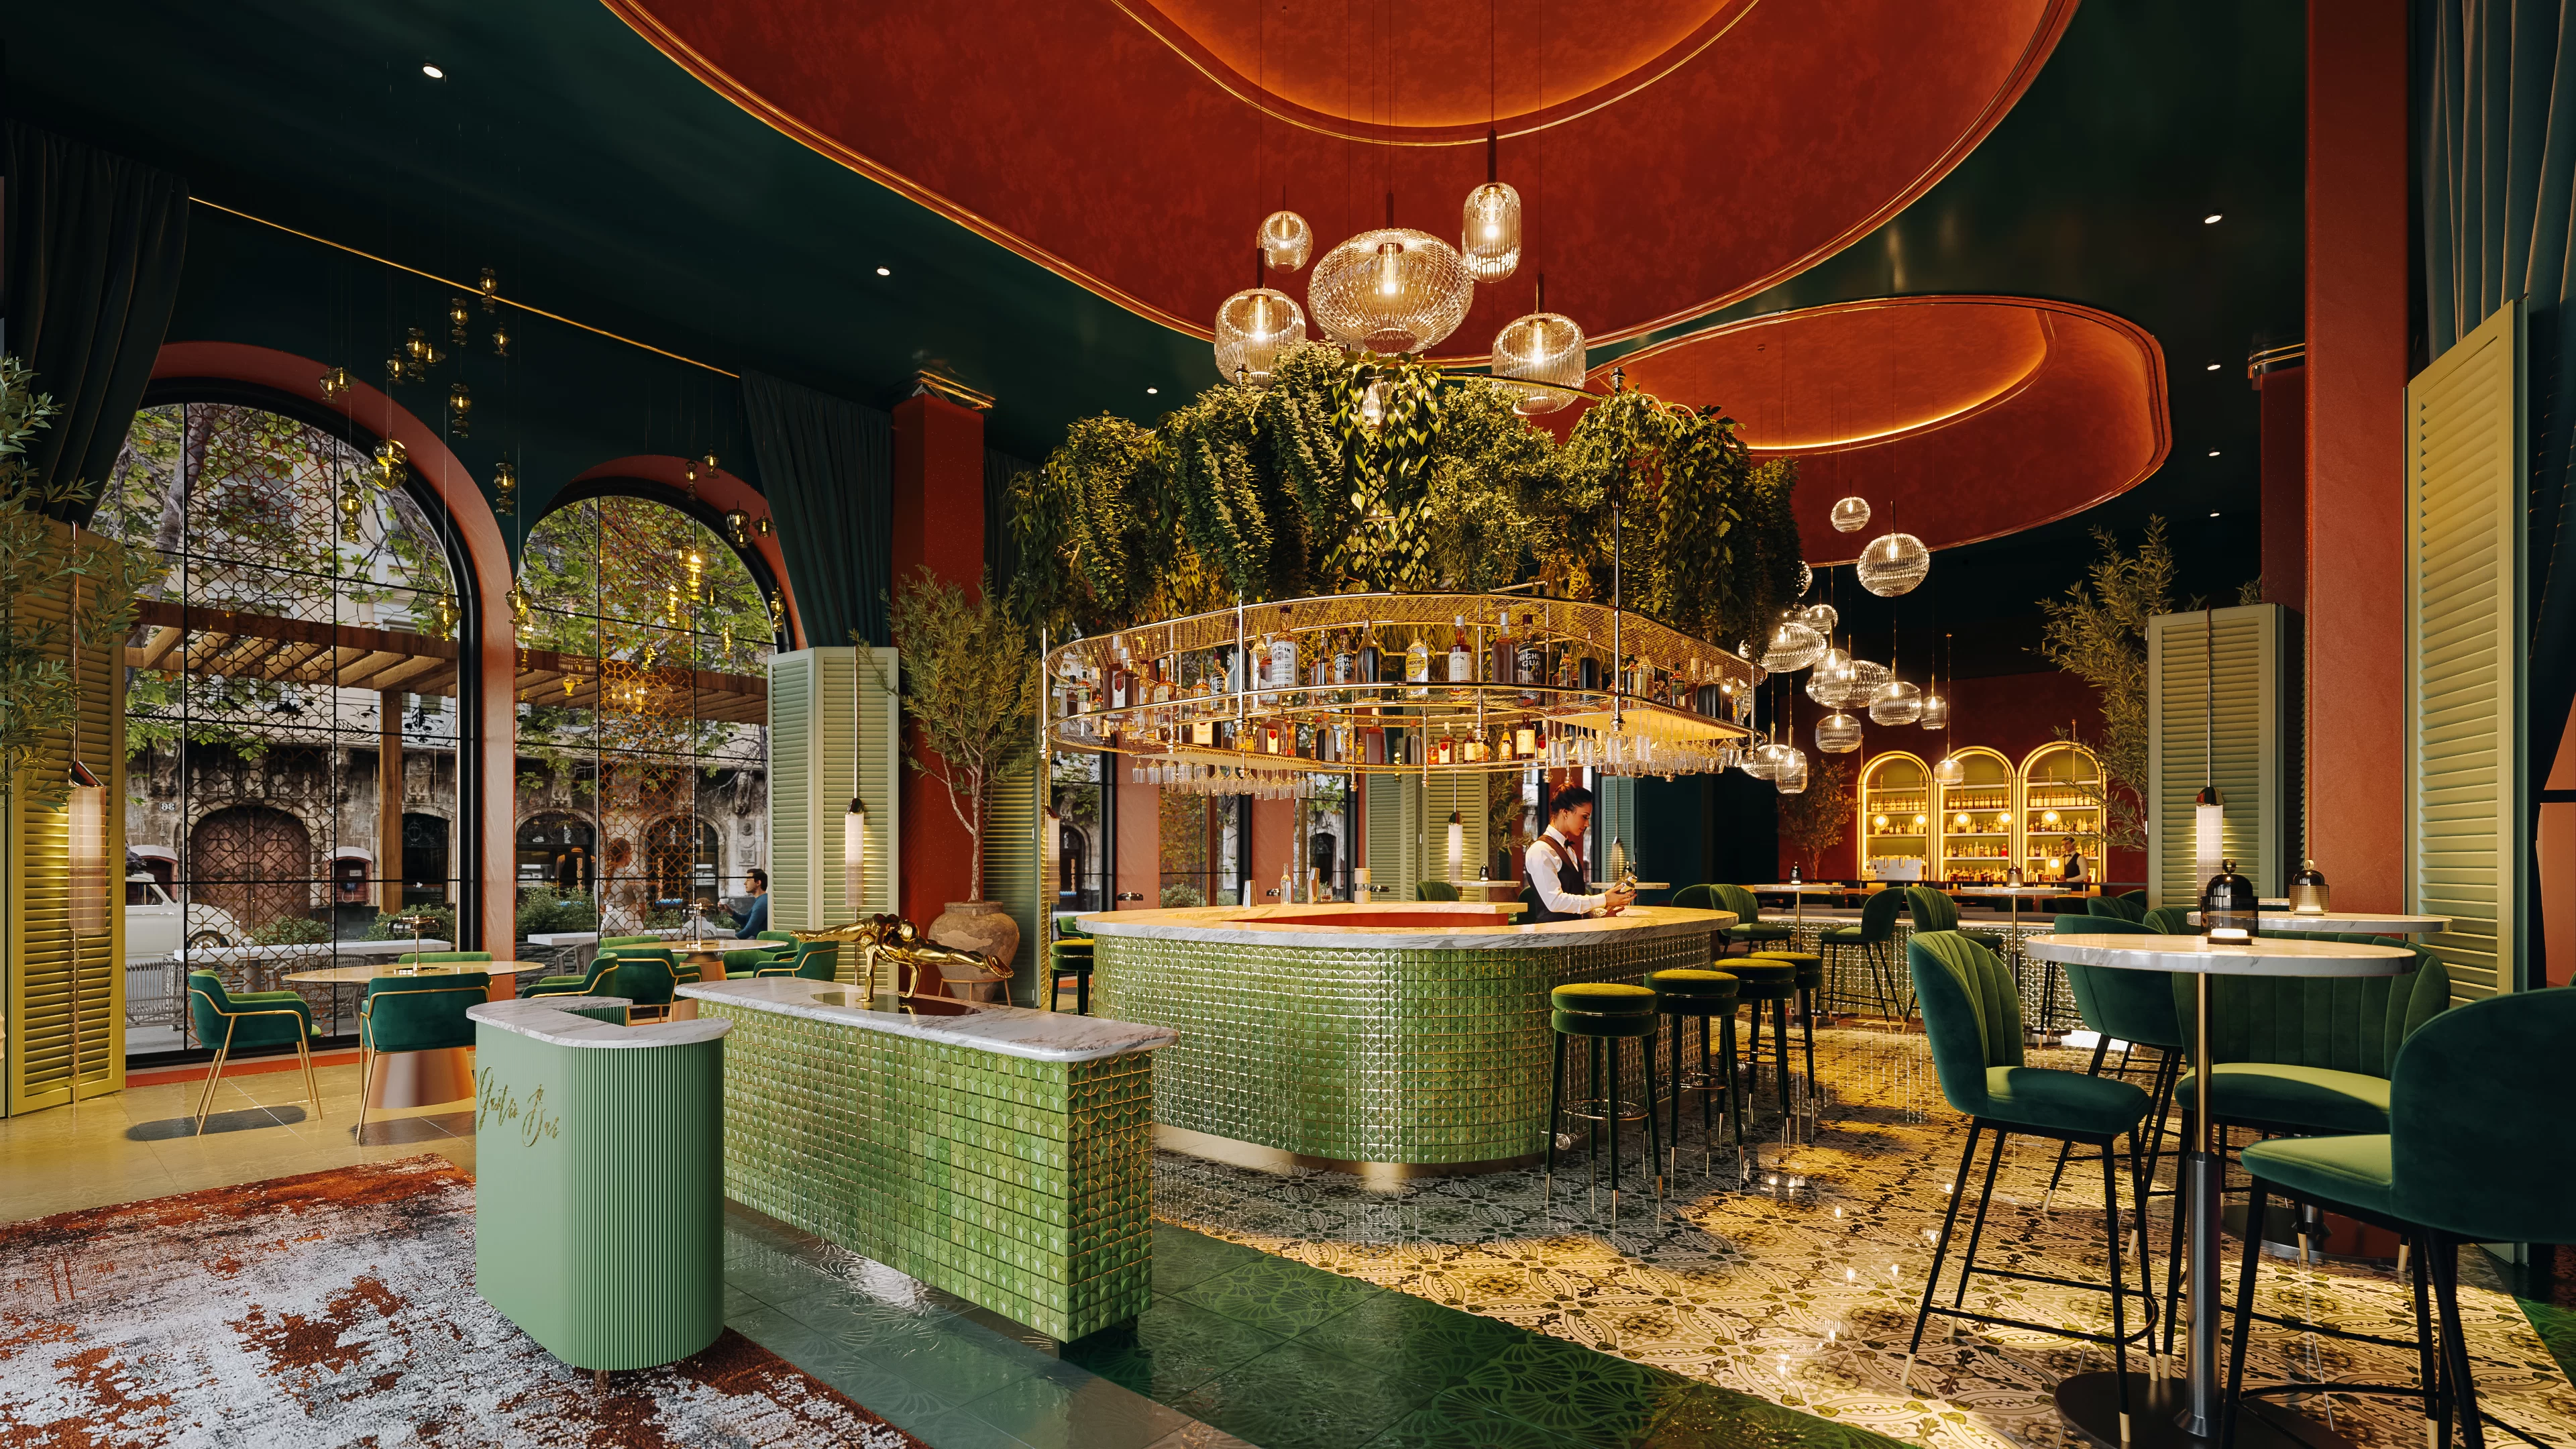 3D Restaurant Interior Visualization with Decor